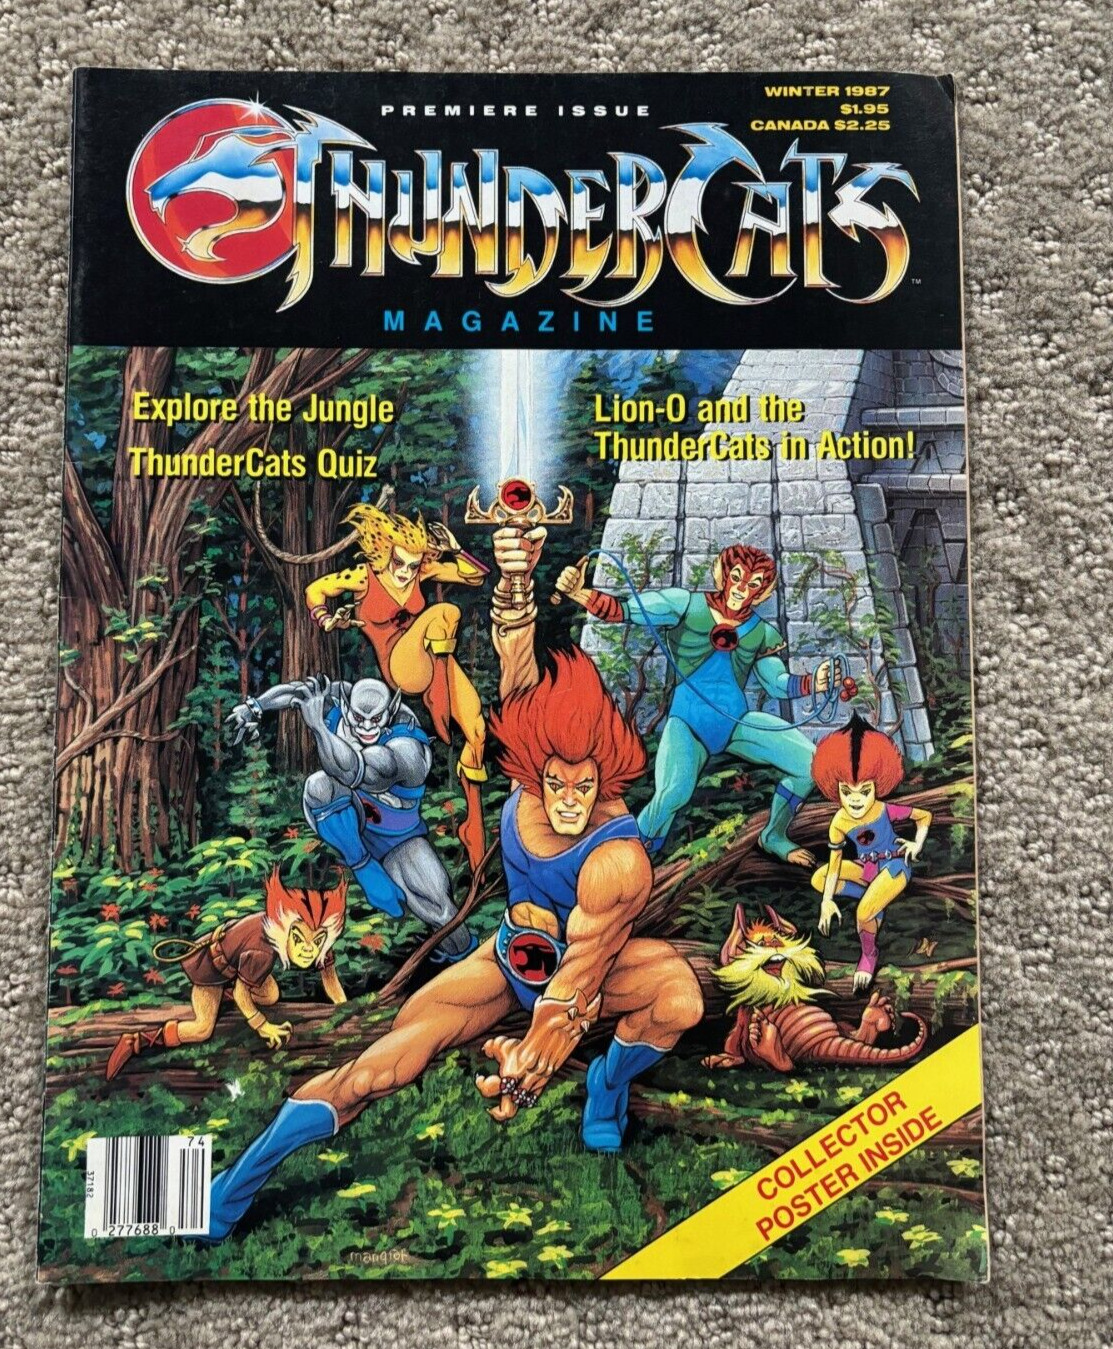 Winter 1987 Premiere Issue ThunderCats Magazine